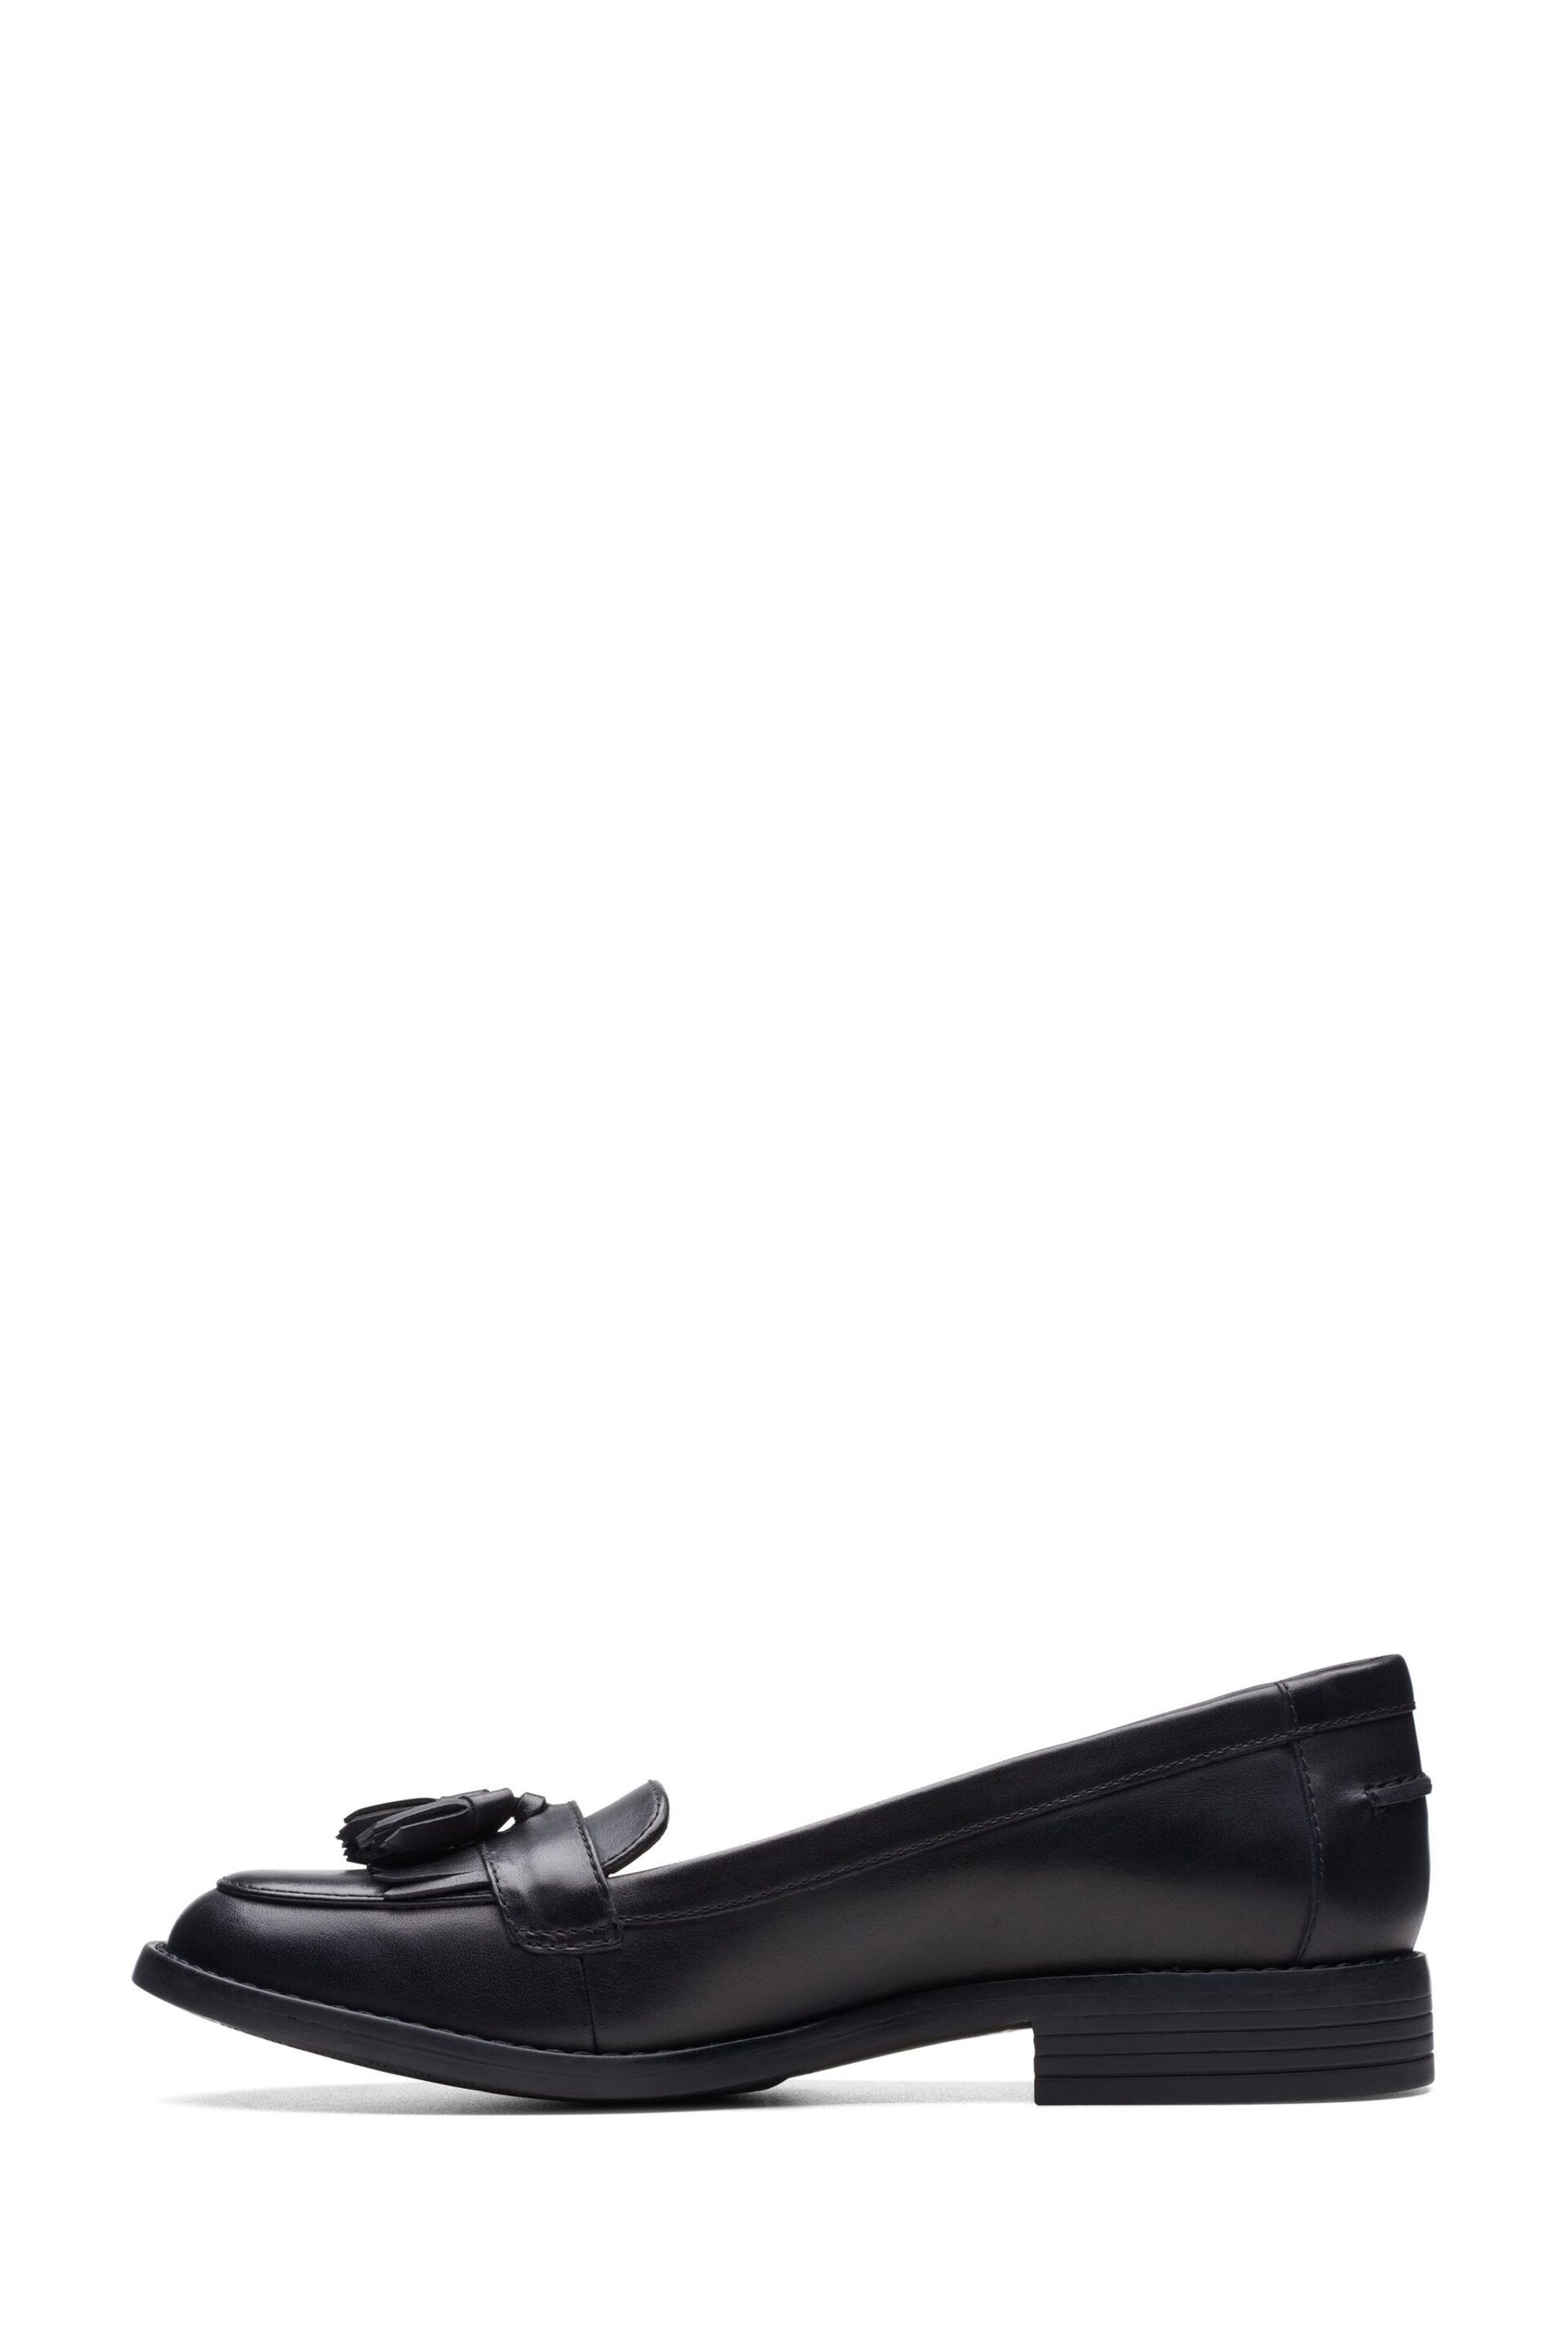 Clarks Black Standard Fit (F) Leather Loafer Shoes - Image 2 of 7